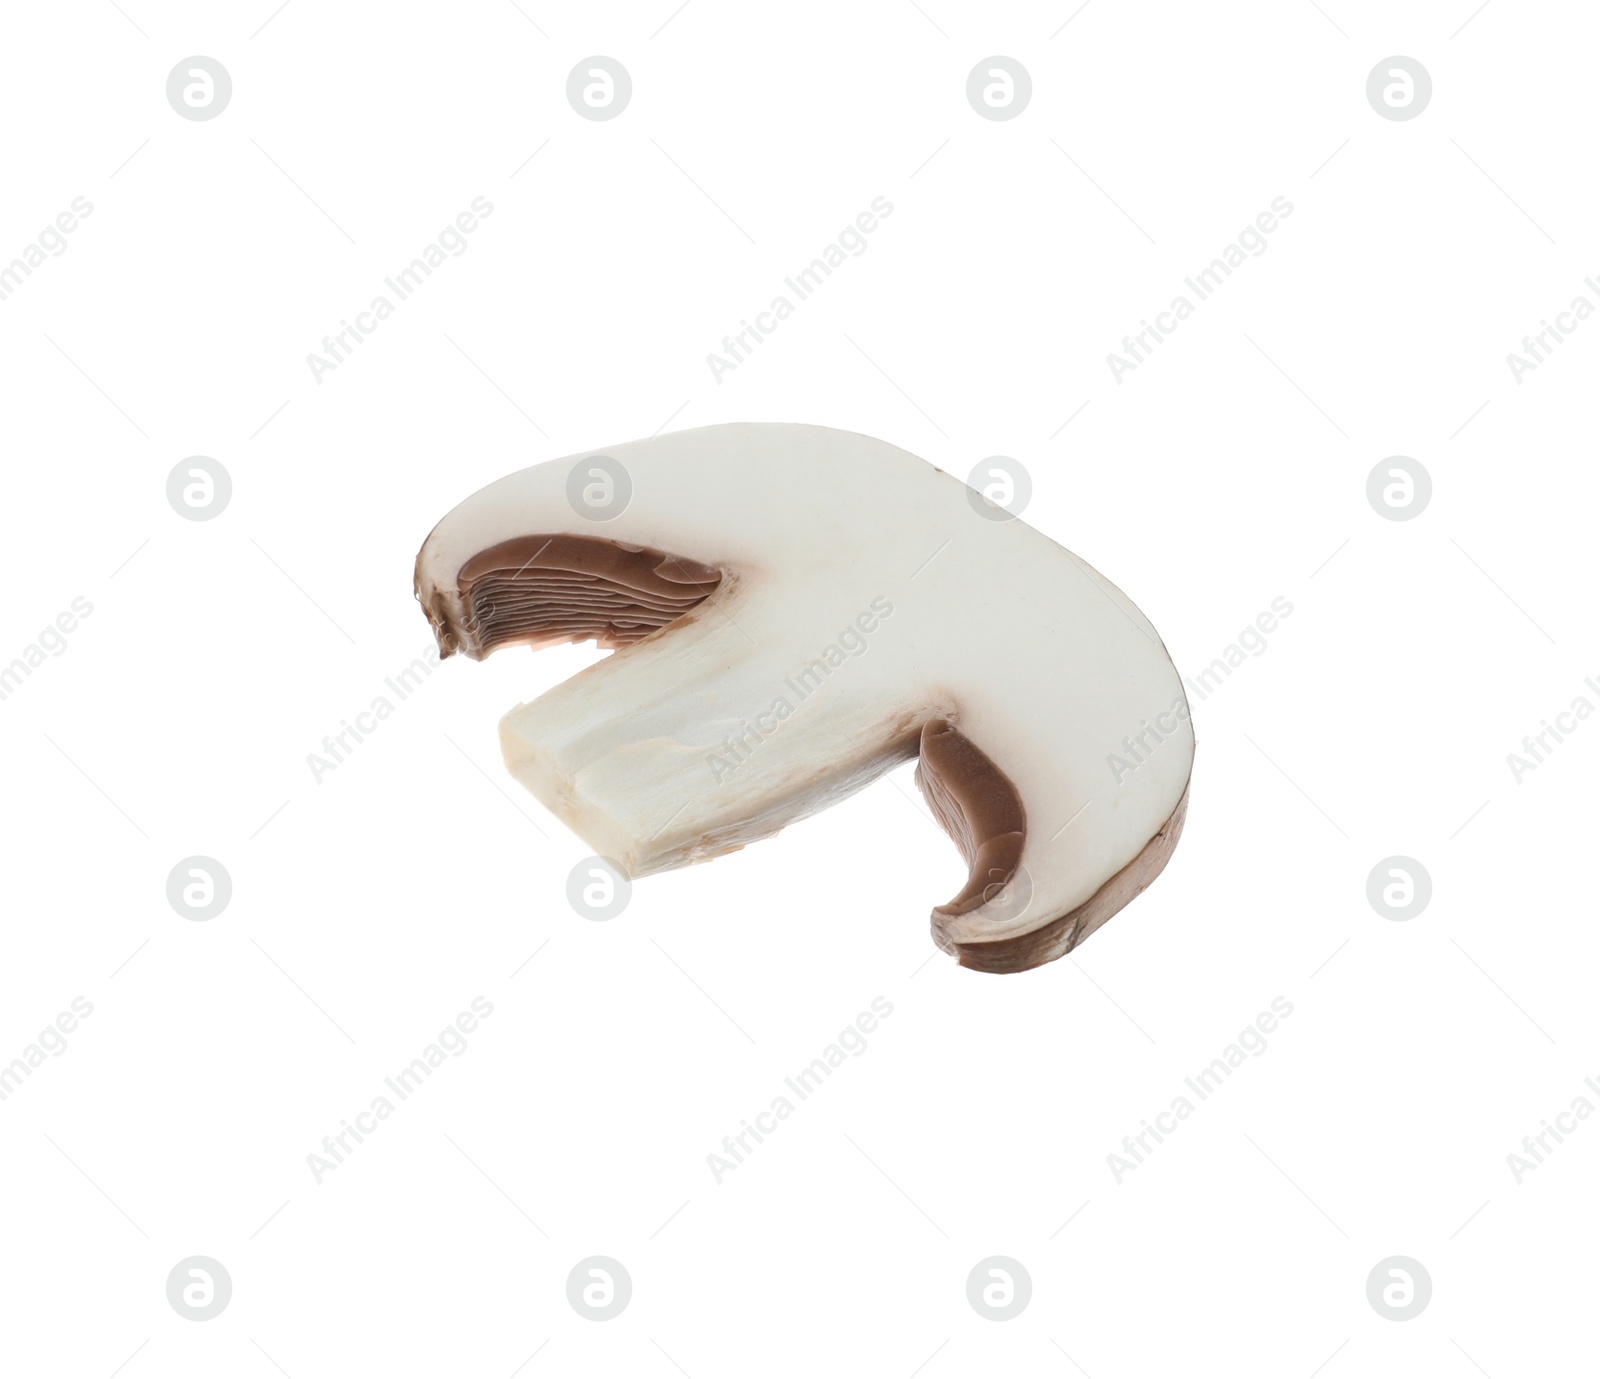 Photo of Slice of champignon mushroom isolated on white